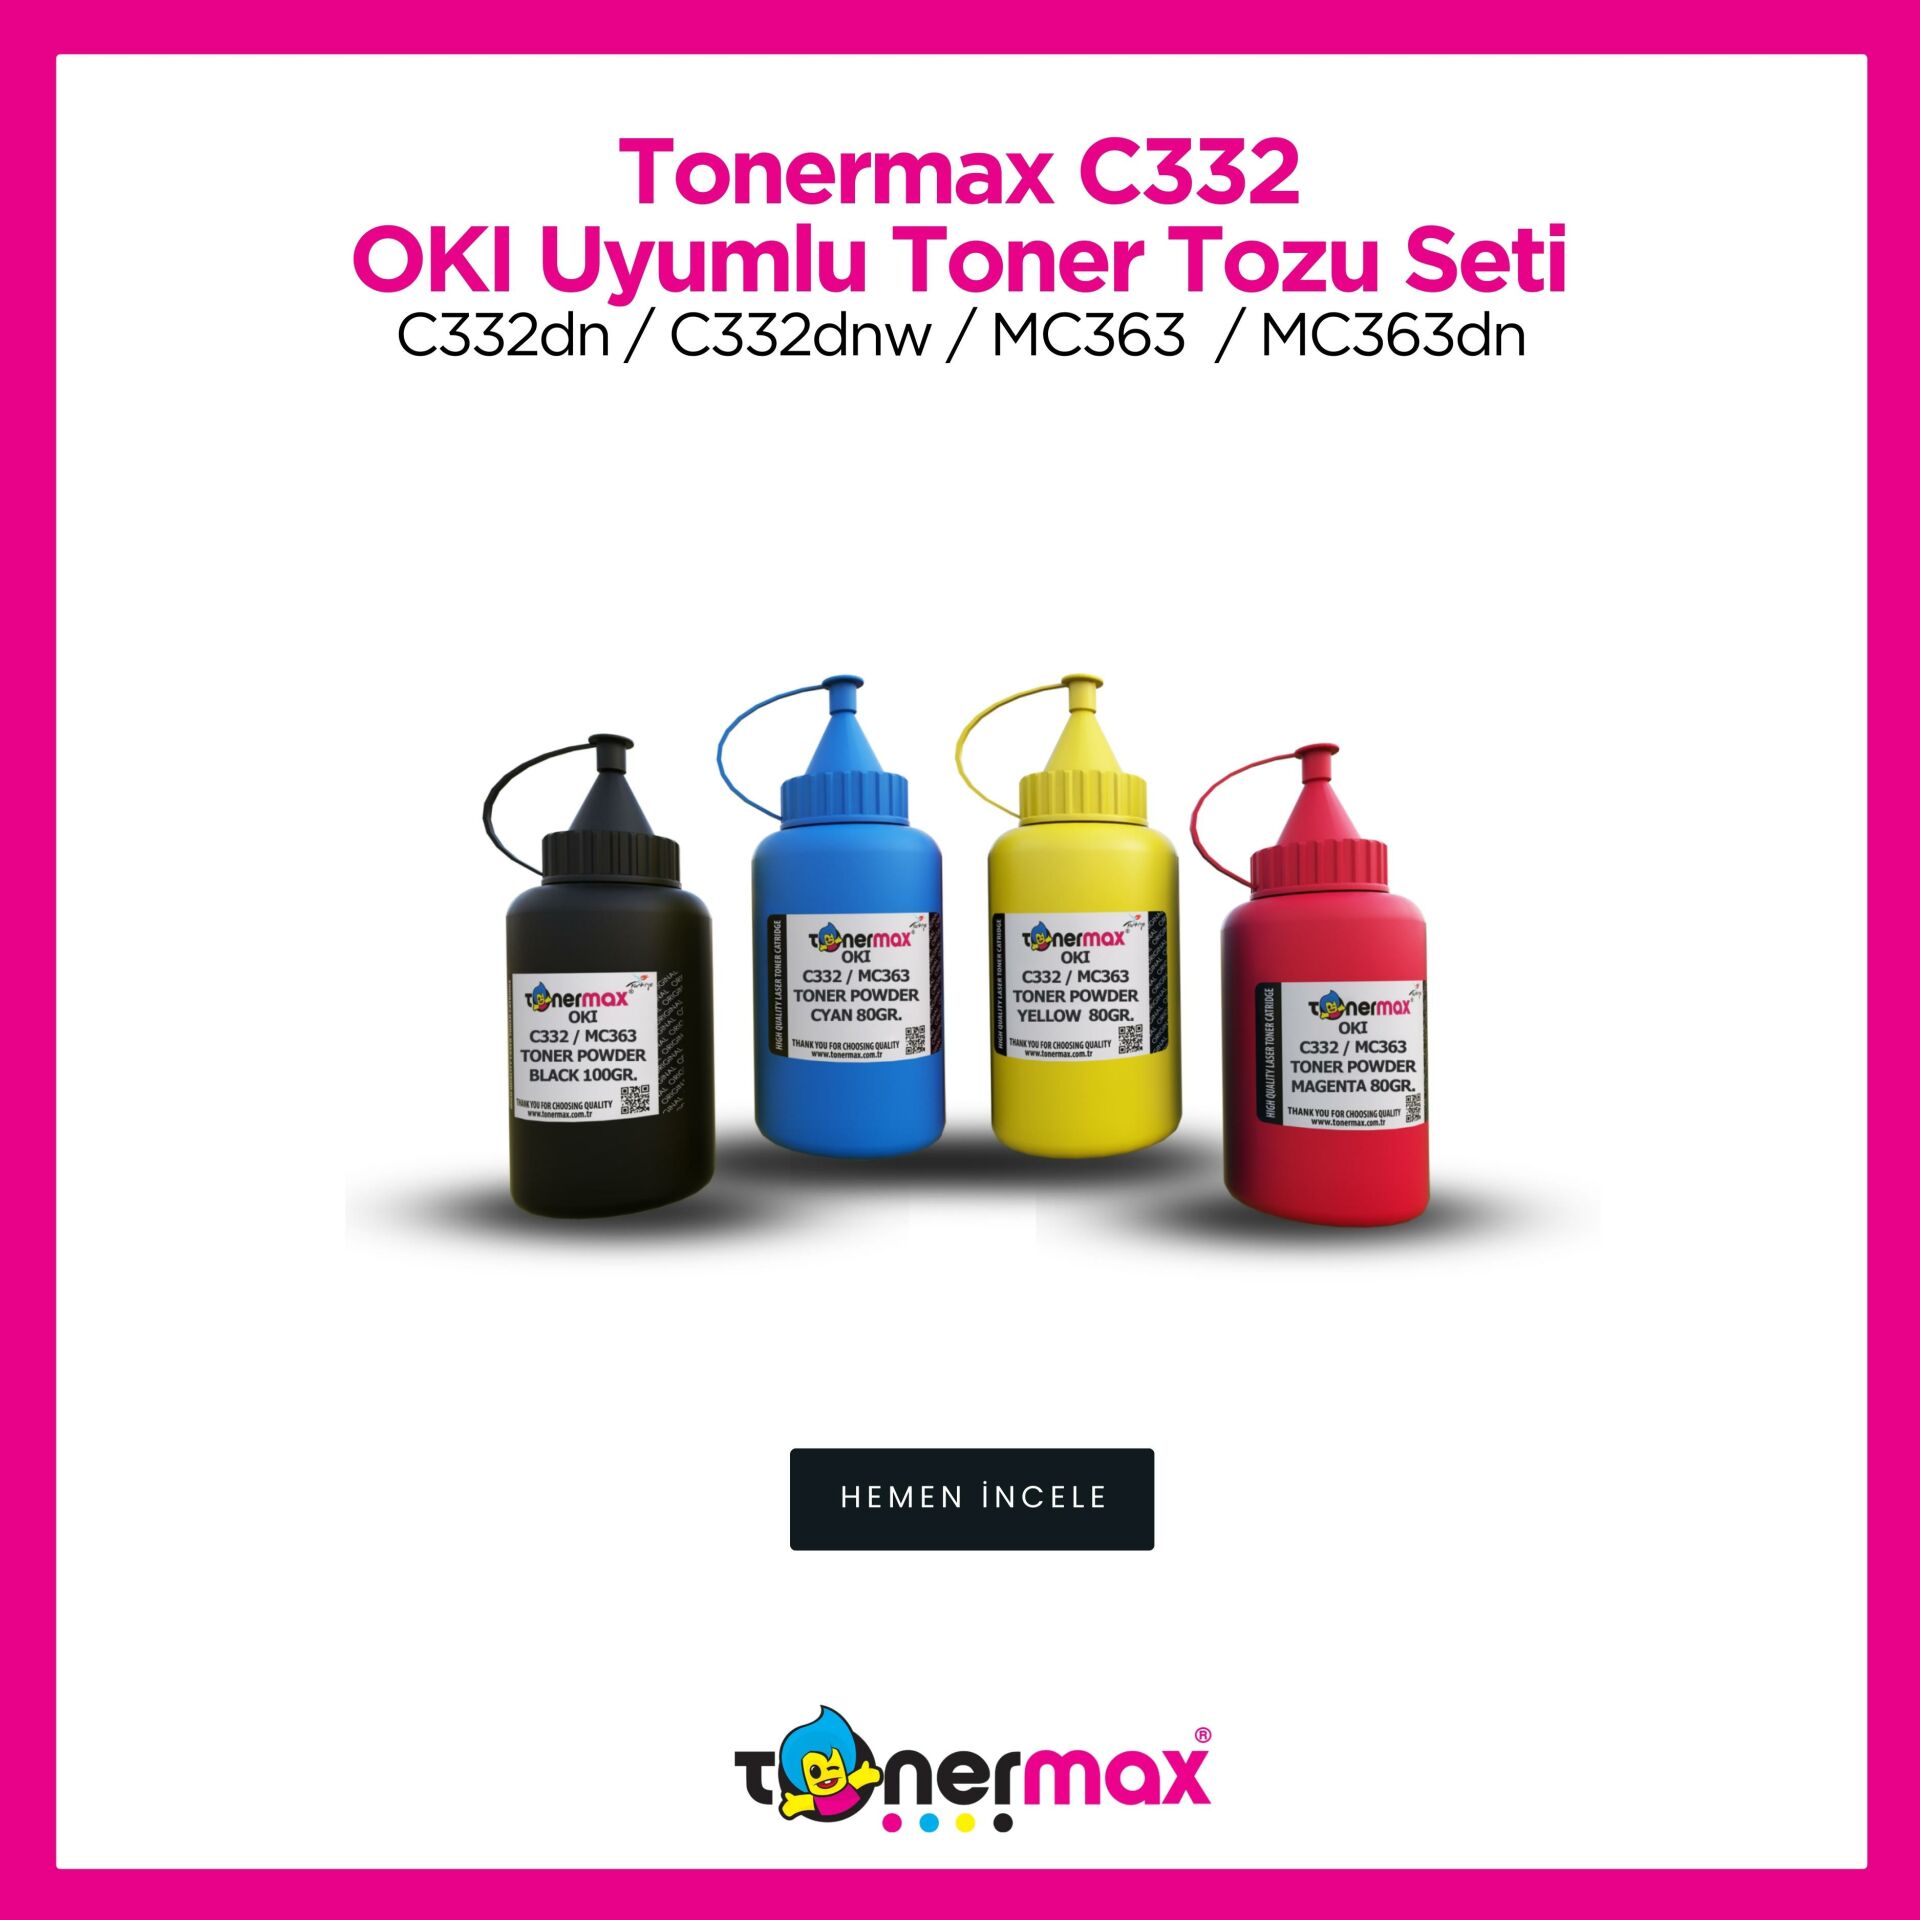 Oki C332 / MC363 Toner Tozu Set